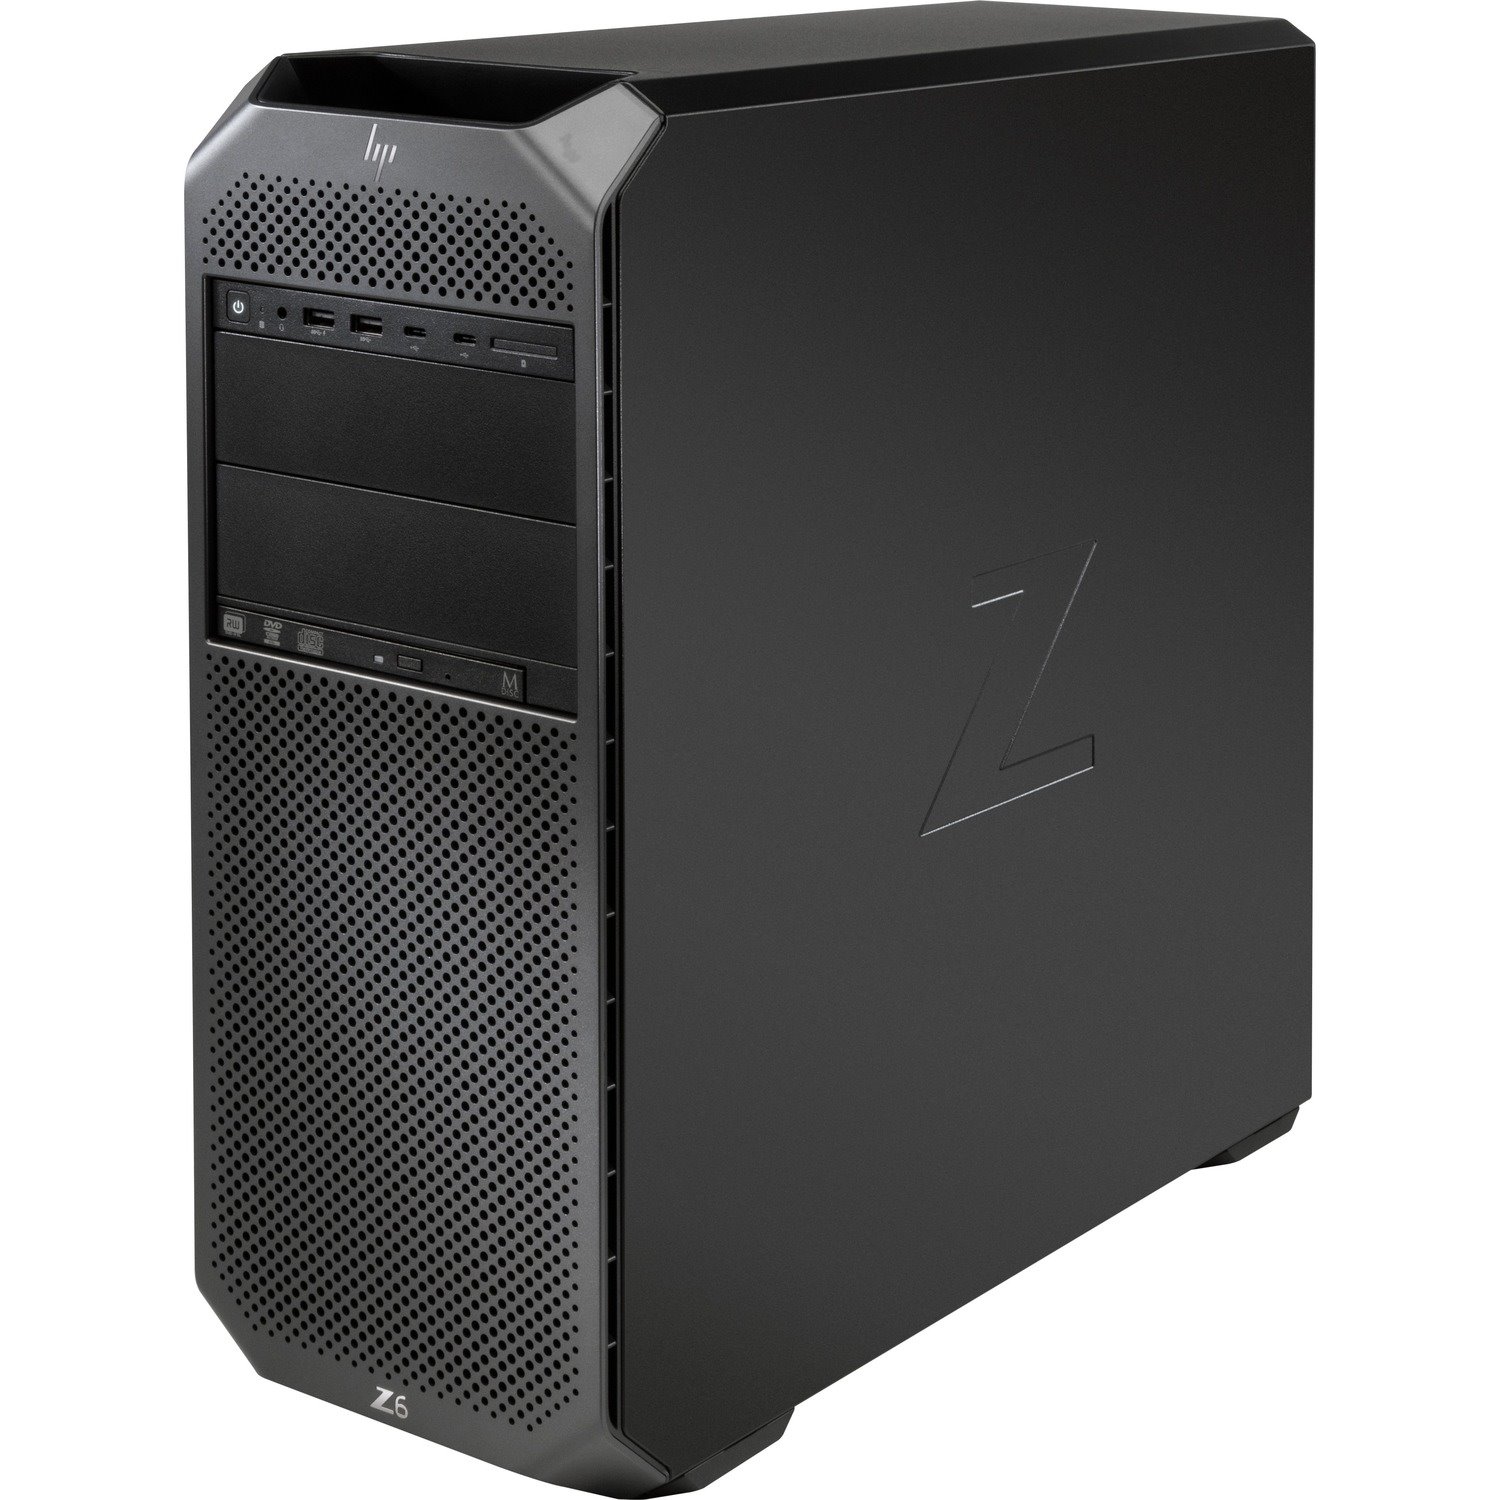 HP Z6 G4 Workstation - Intel Xeon Silver 4214 - 16 GB - 256 GB SSD - Tower - Black